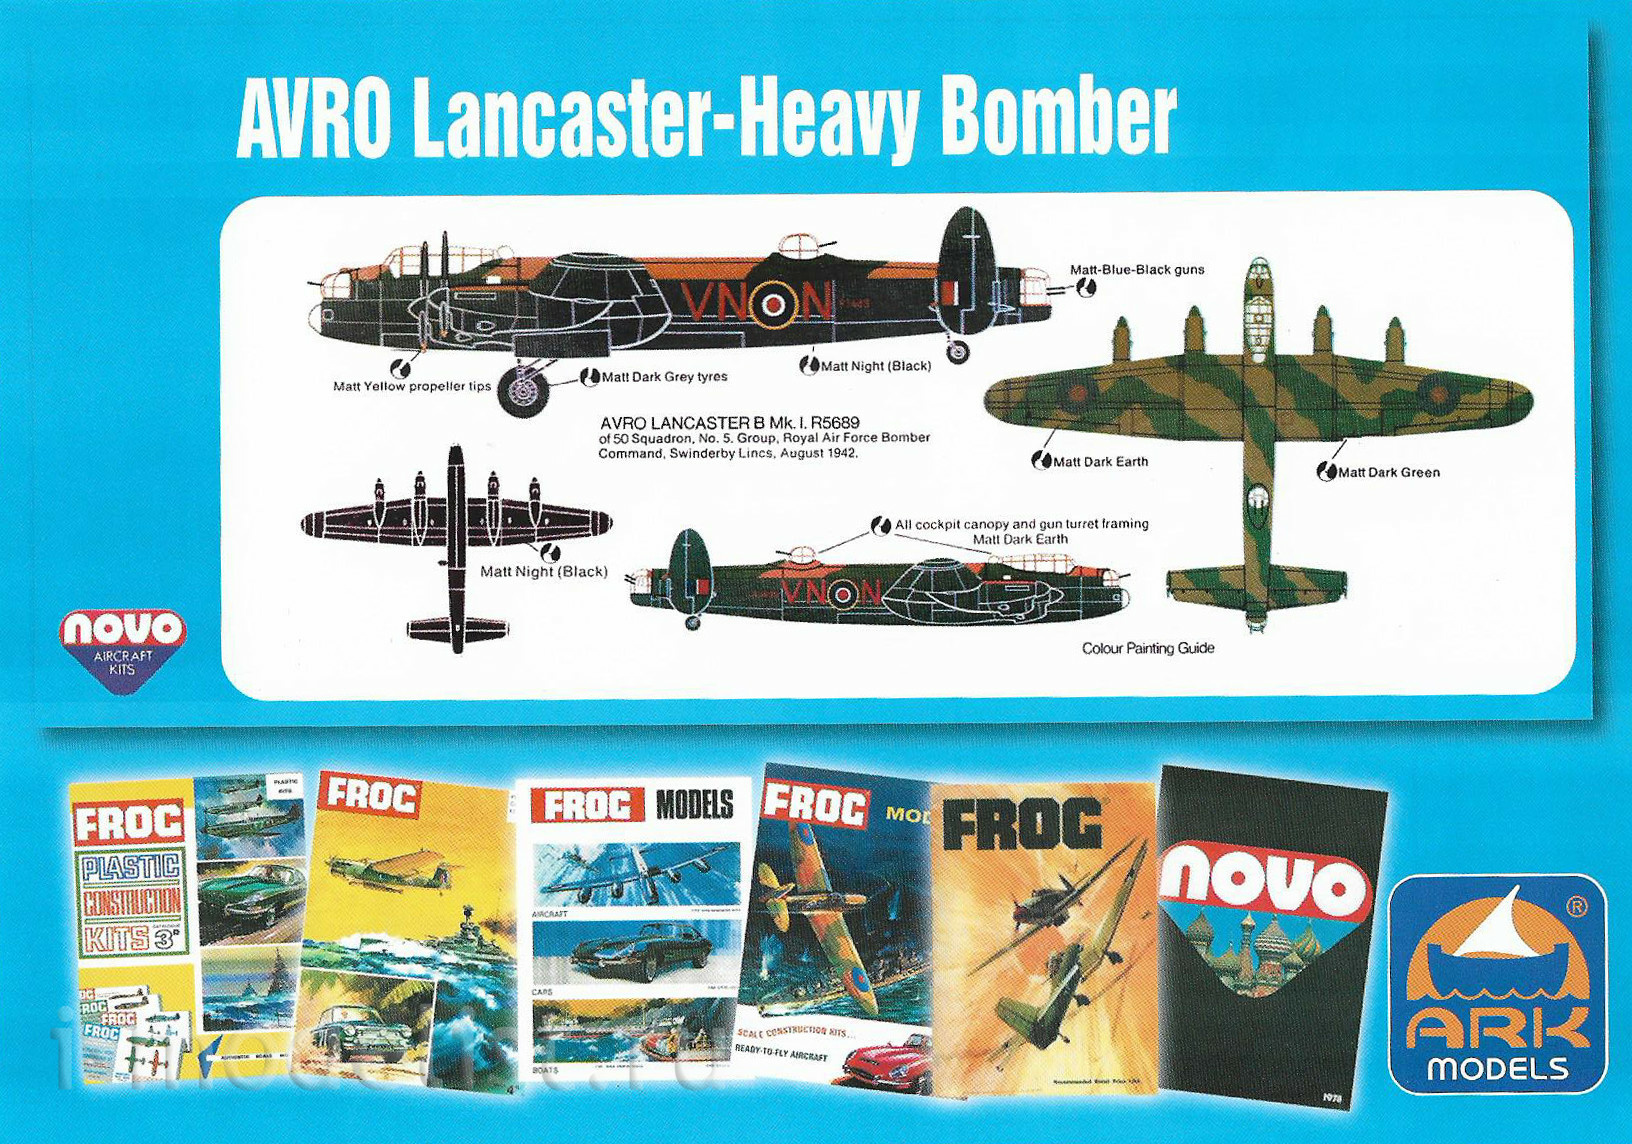 96001 ARK-models 1/96 Тяжёлый бомбардировщик «Ланкастер»